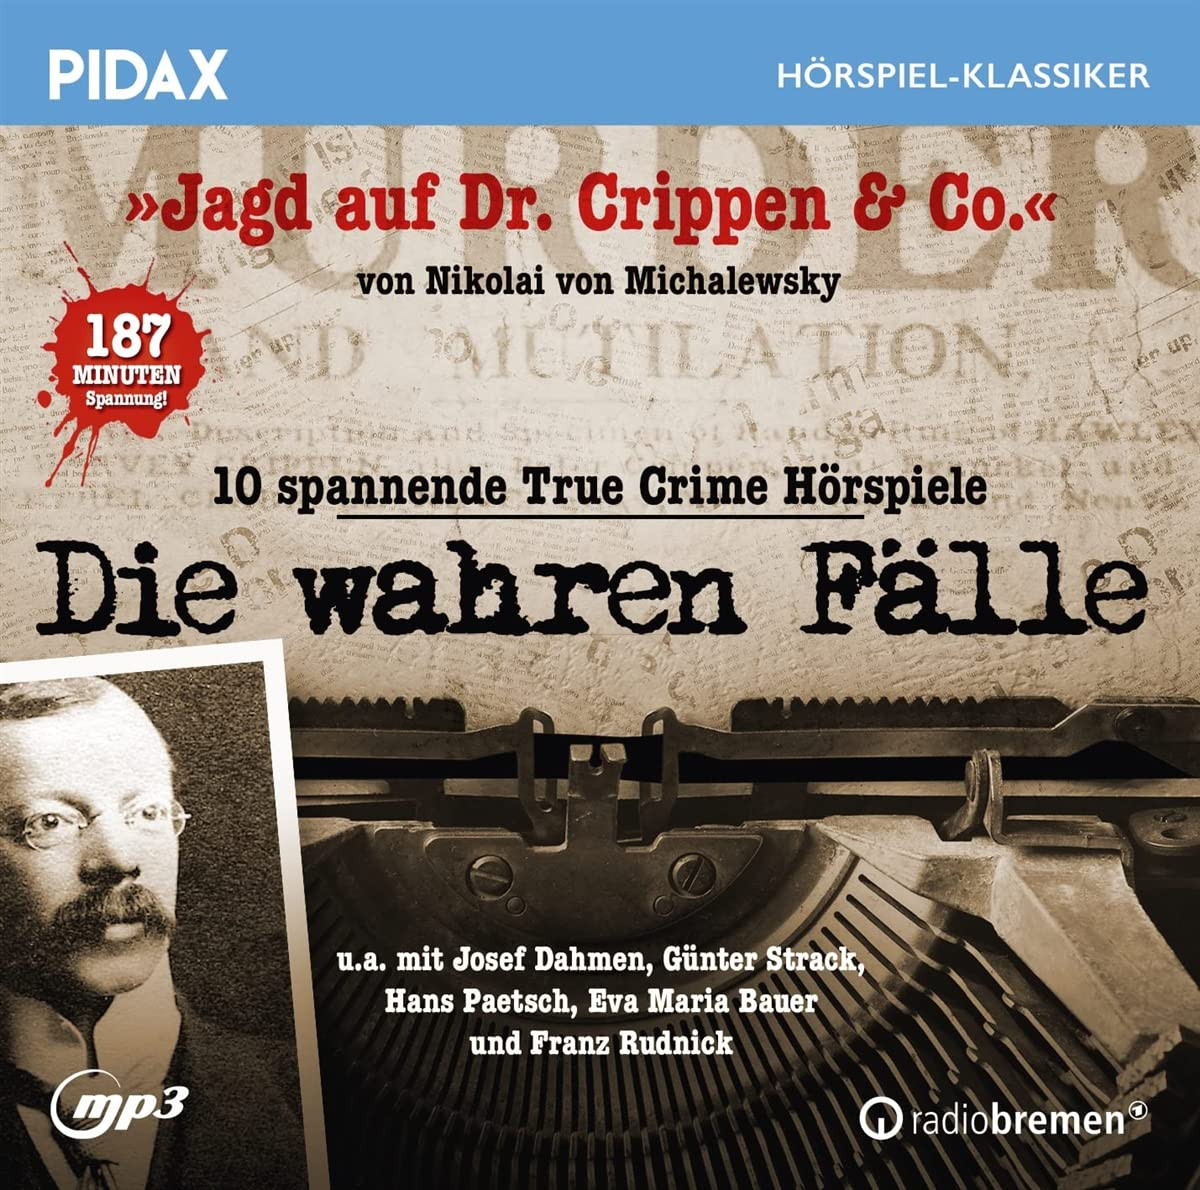 Pidax Hörspiel Klassiker - Jagd auf Dr. Crippen & Co. - 10 spannende True Crime Hörspiele